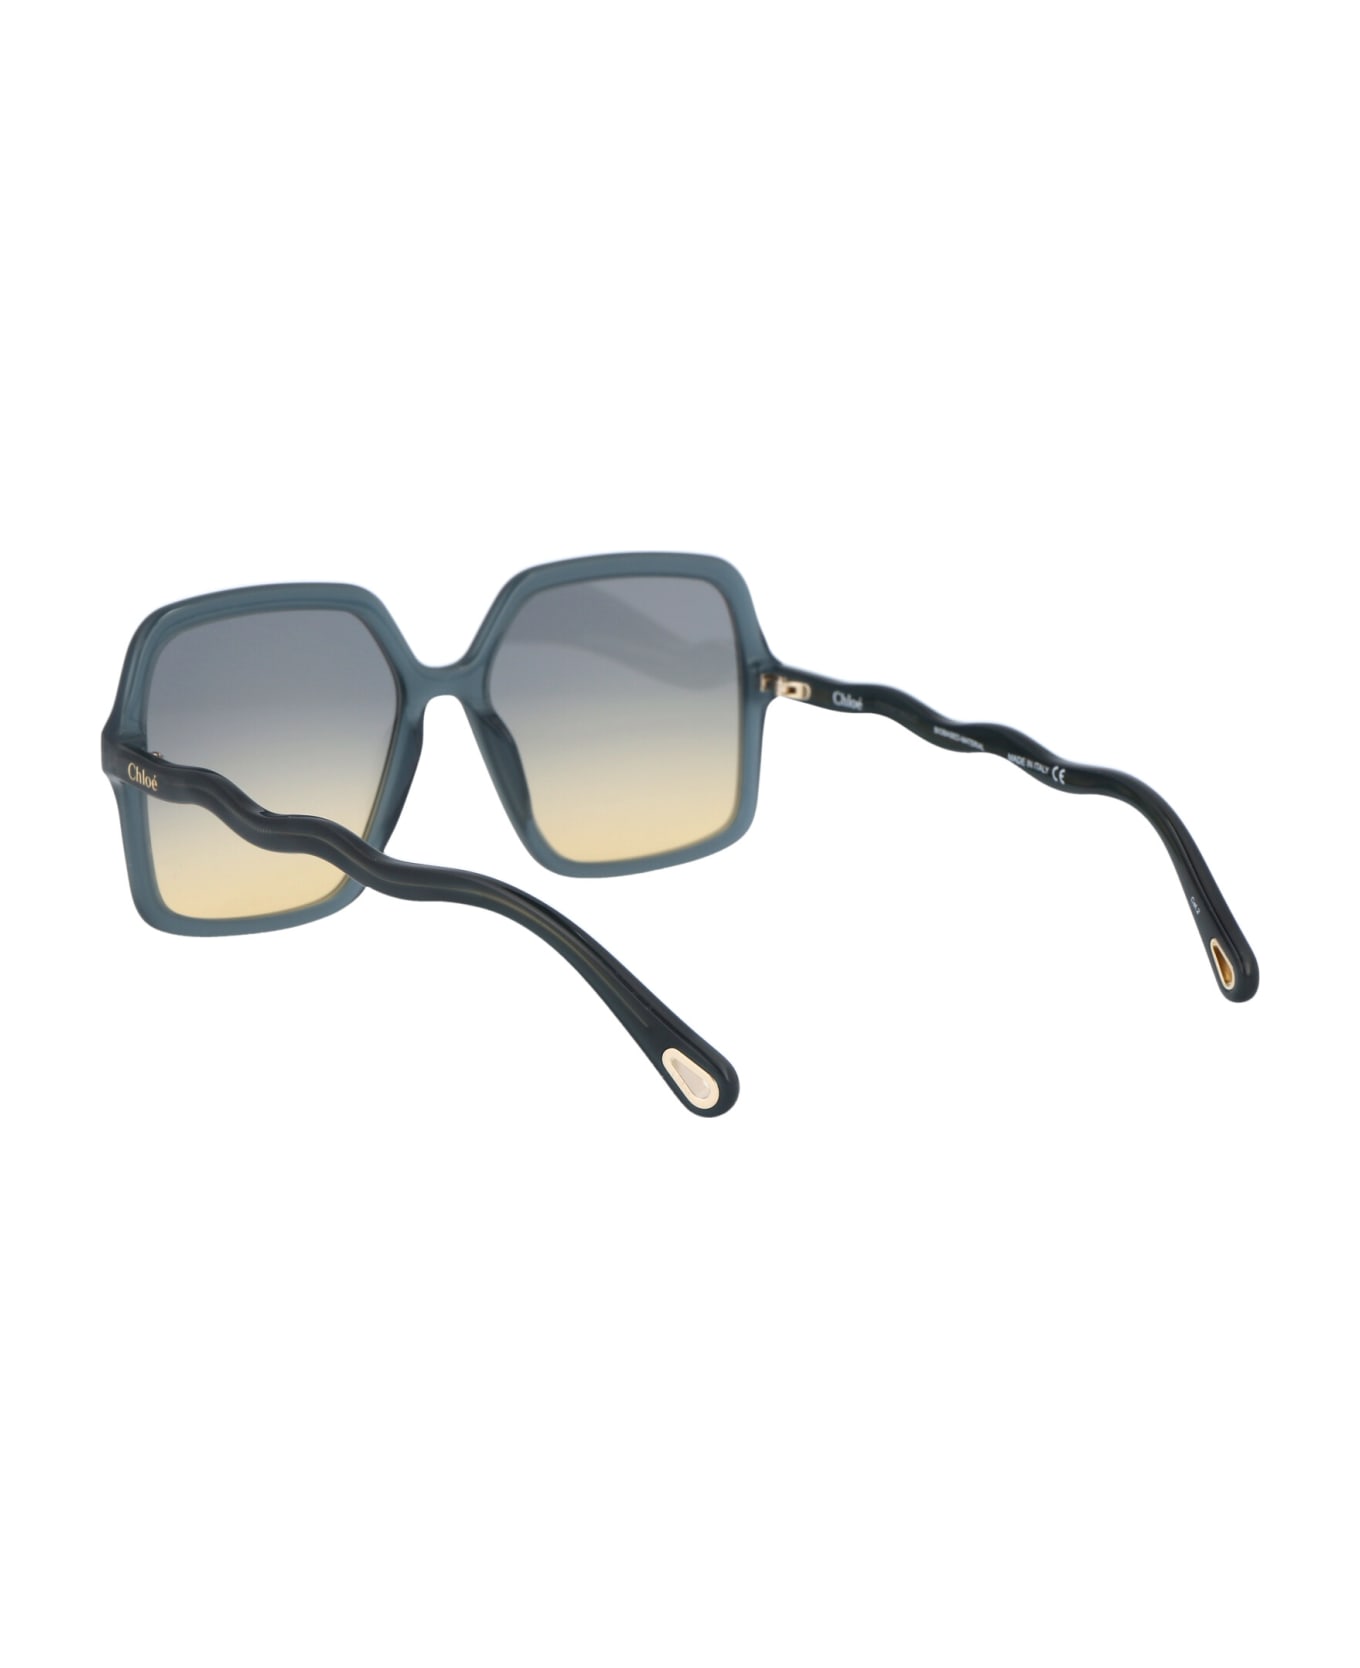 Chloé Eyewear Ch0086s Sunglasses - 004 BLUE BLUE BLUE